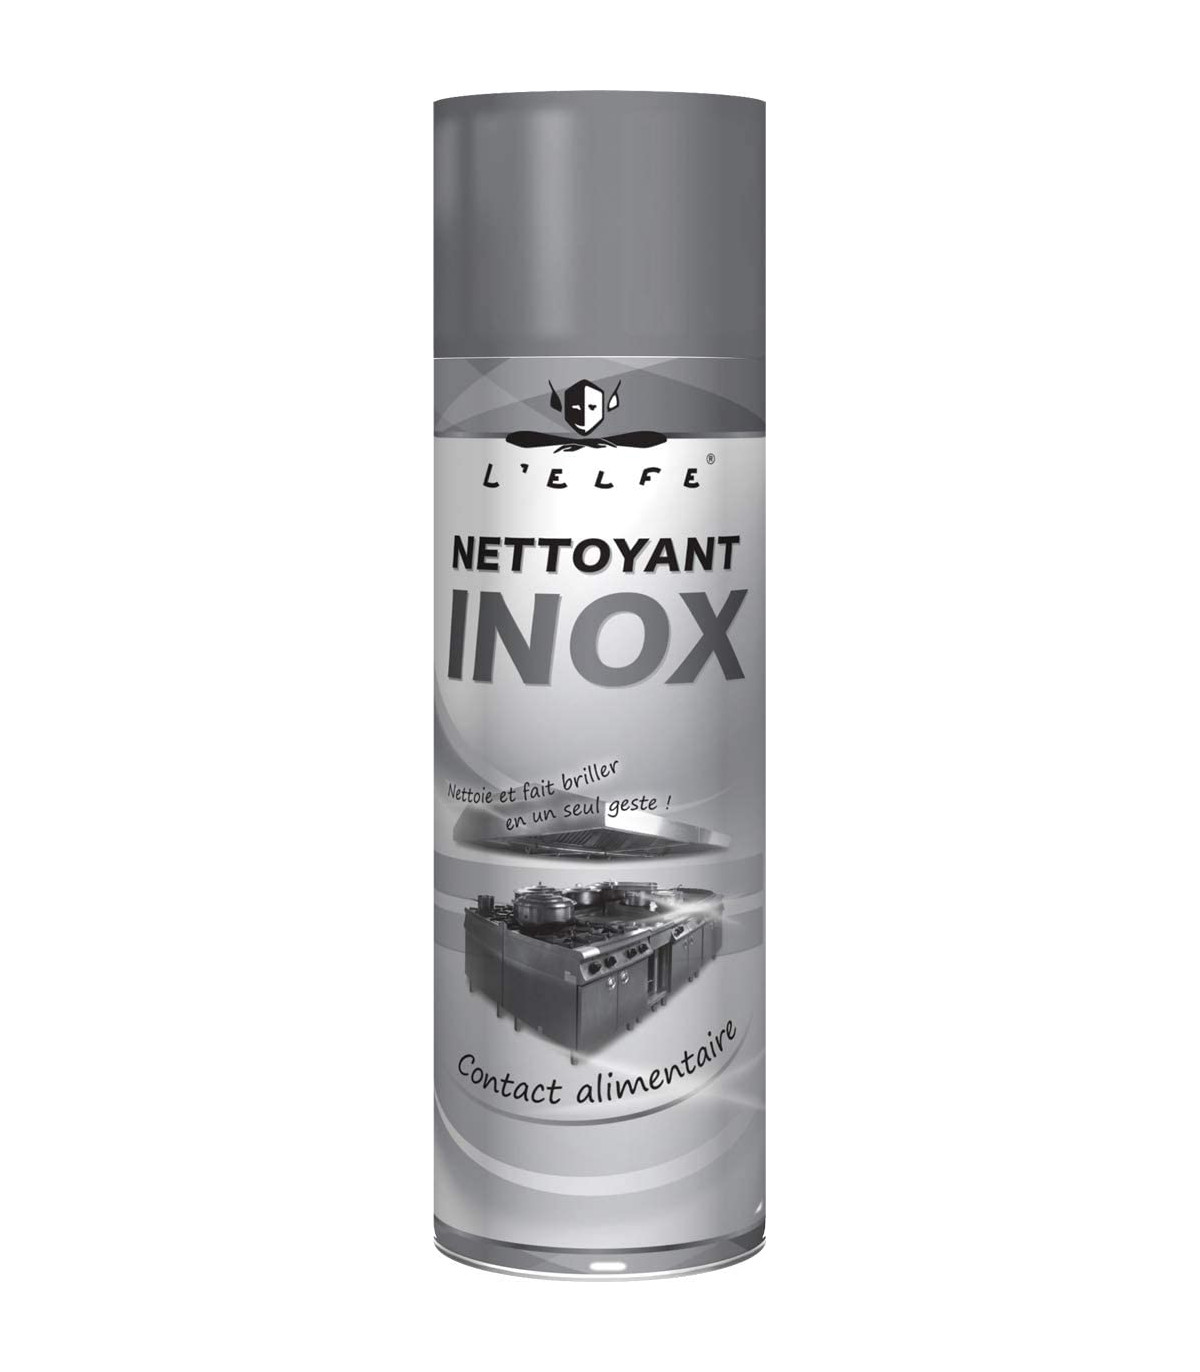 NETTOYANT INOX AEROSOL